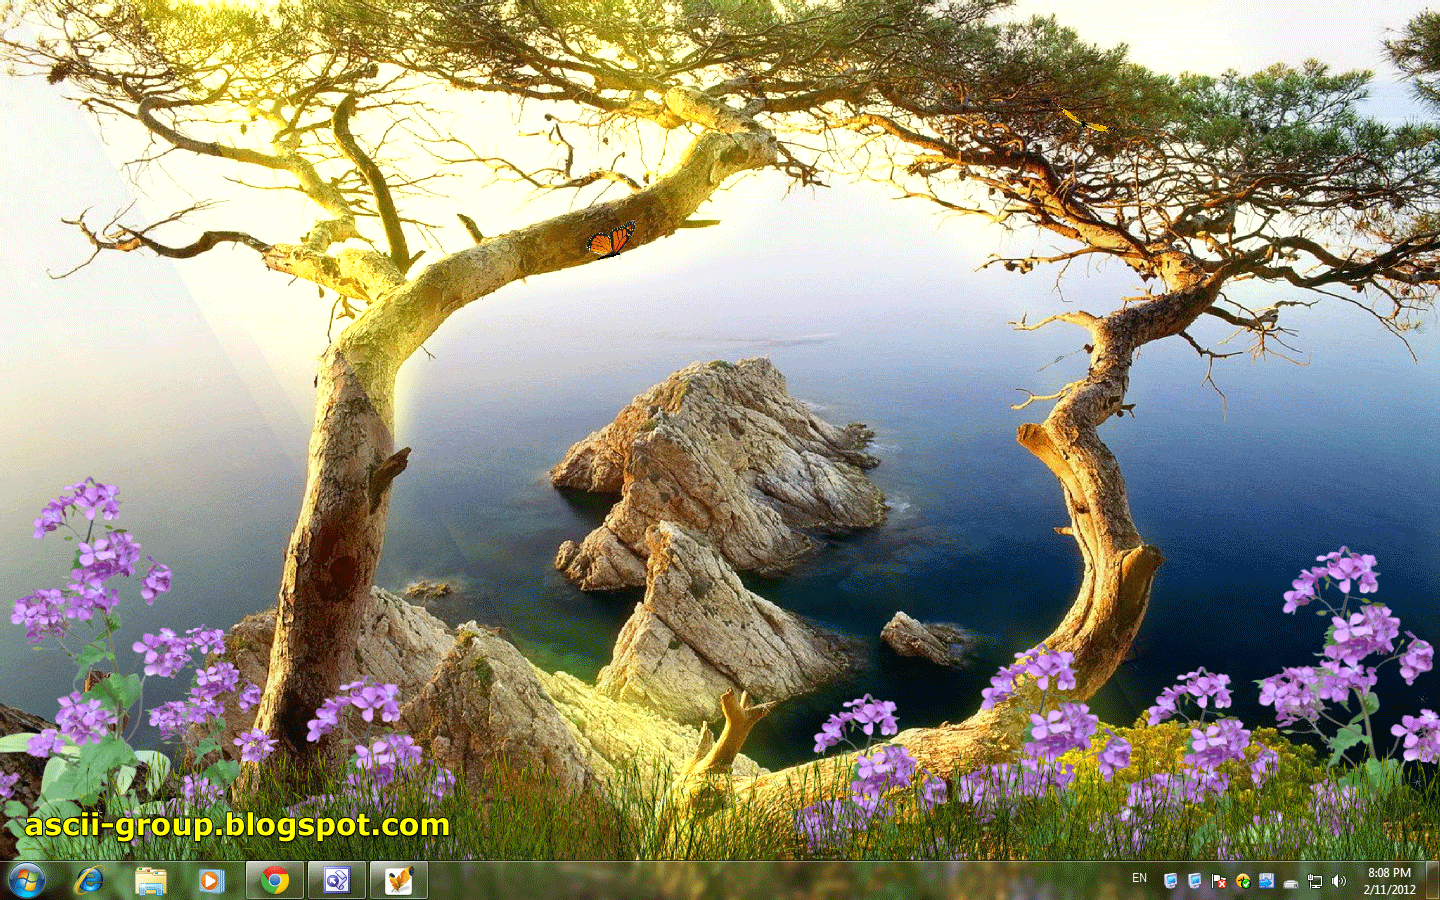 ندى مساعدة مقبرة  Free Download - cultural Blog: تحميل خلفيات متحركة لويندوز Download  Beautiful Landscape Animated Wallpaper for Windows